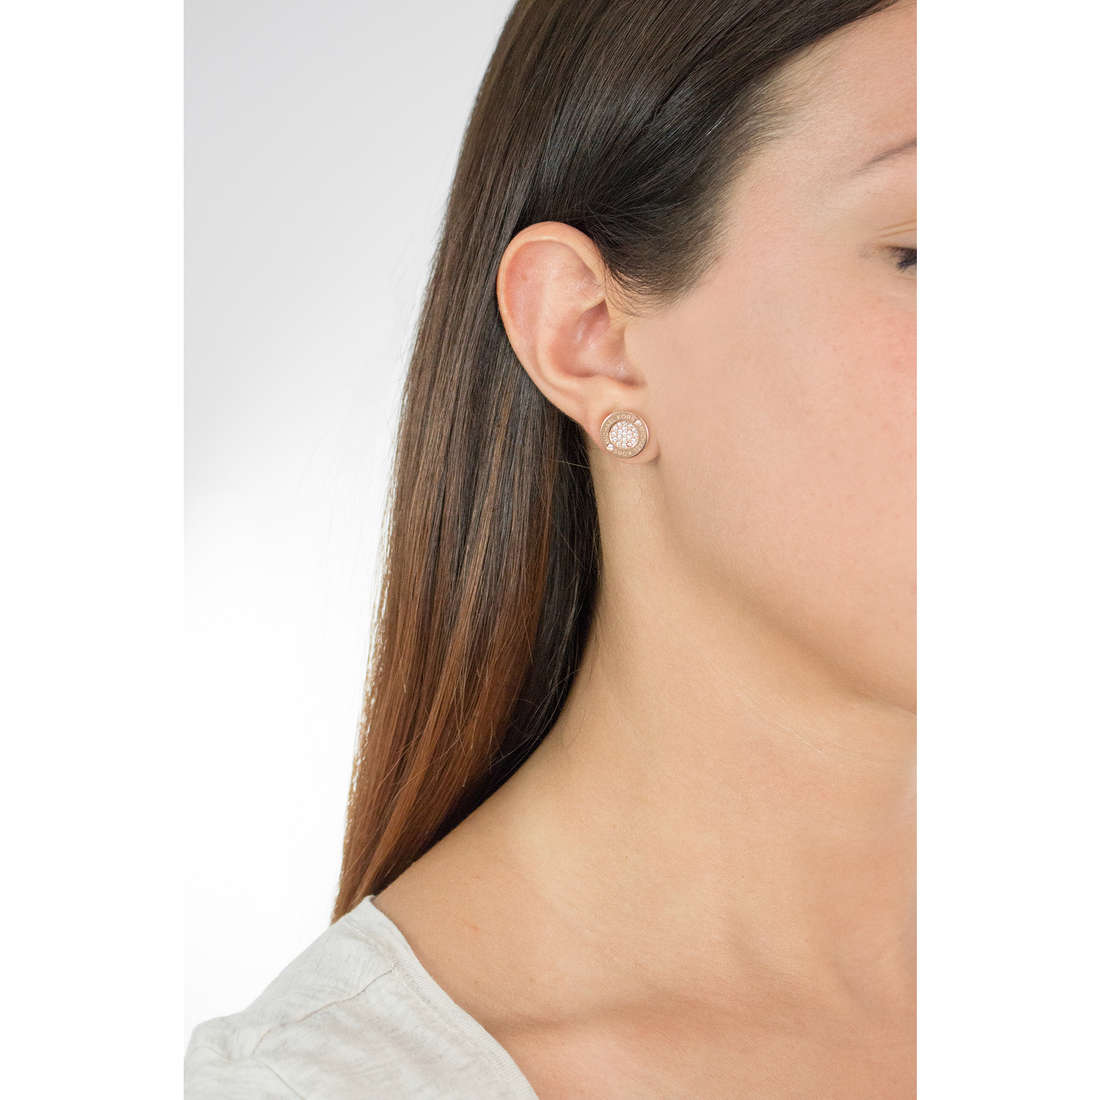 MICHAEL KORS Womens Padlock Drop Earrings Pave Crystals Rose Gold Tone   eBay